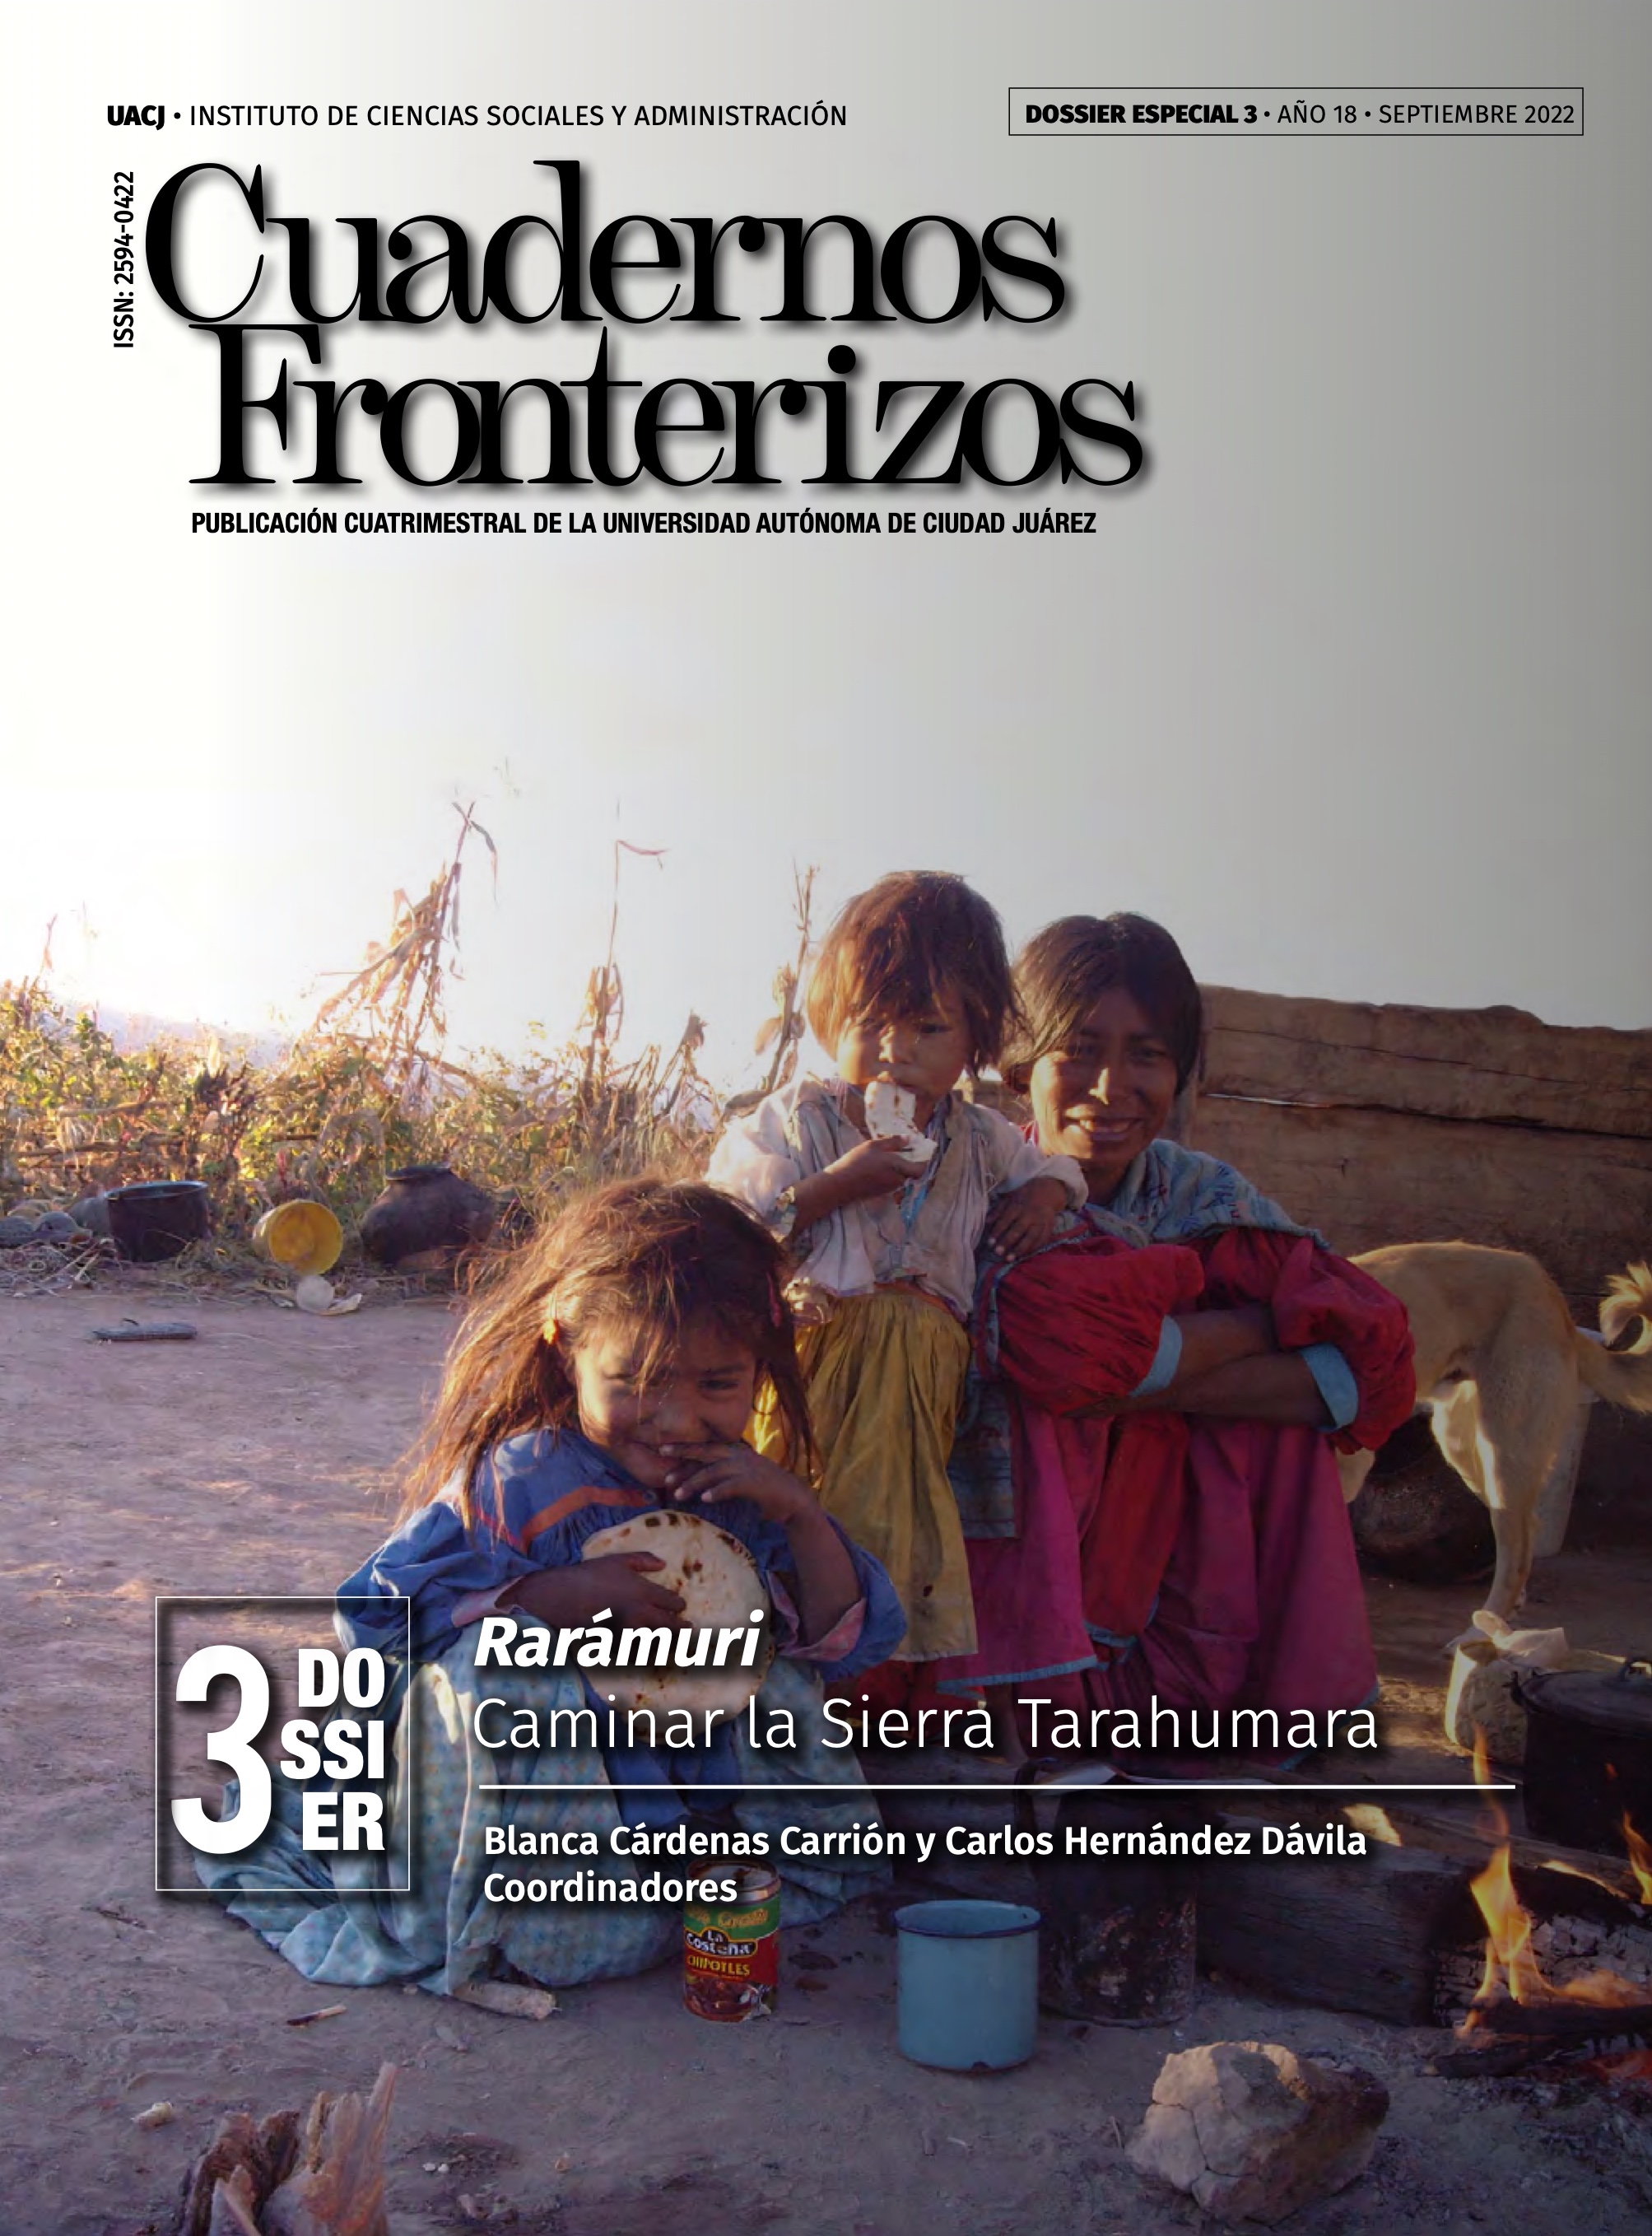 					Ver Tercer Dossier Especial: Rarámuri: Caminar la Sierra Tarahumara
				